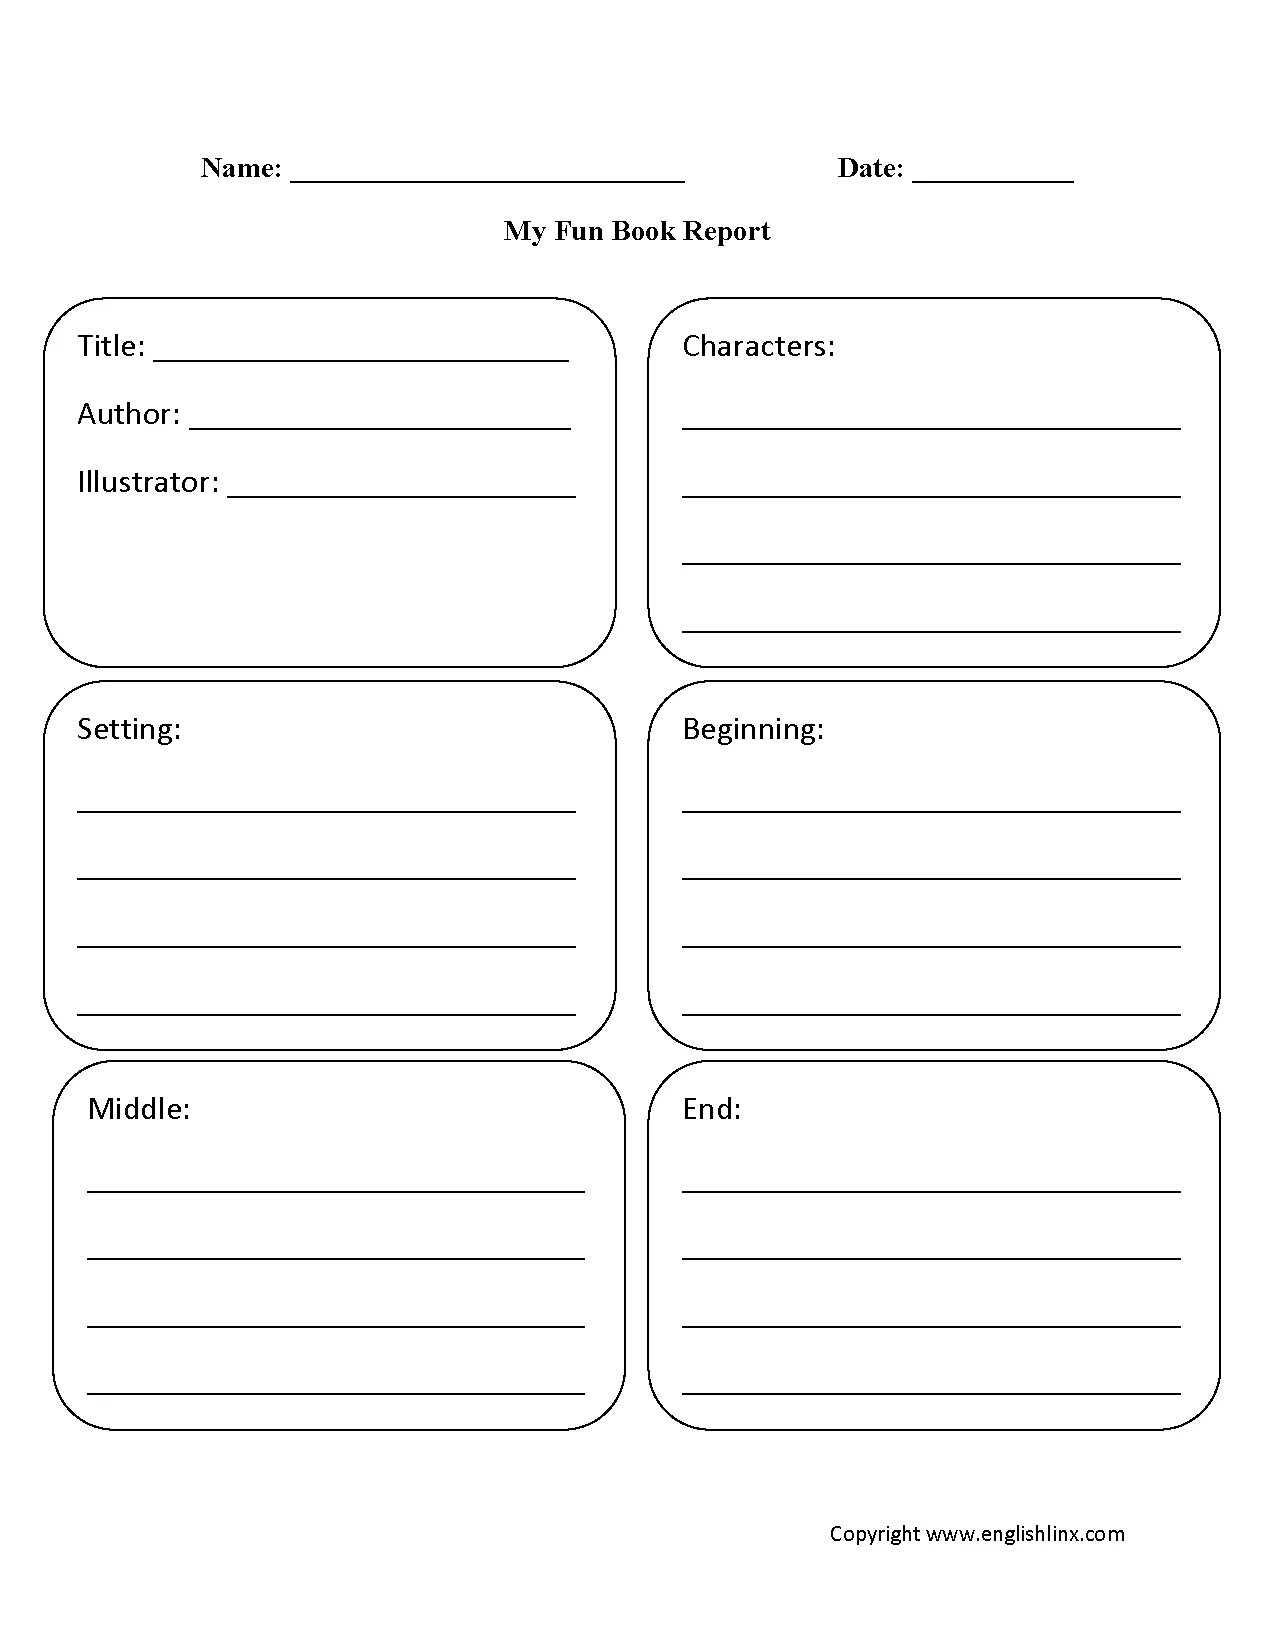 Review worksheet. Book Report Worksheets. My books шаблон. Book Review Worksheet. My book Report.